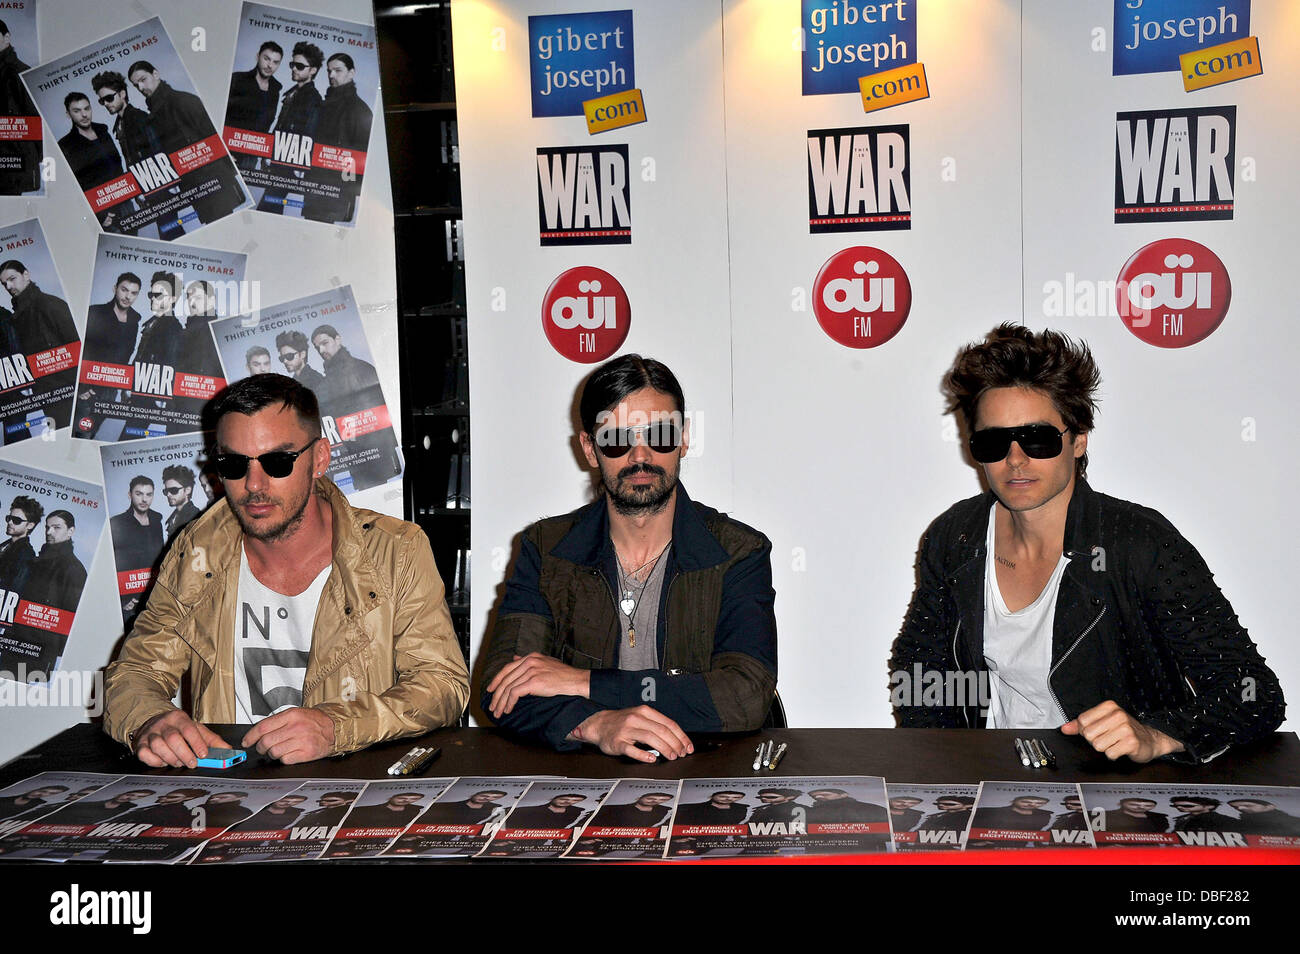 Shannon Leto, Tomo Milicevic, Jared Leto auf dem 30 Seconds To Mars "This Is War" CD signing bei Gibert Joseph. Paris, Frankreich - 07.06.11 Stockfoto